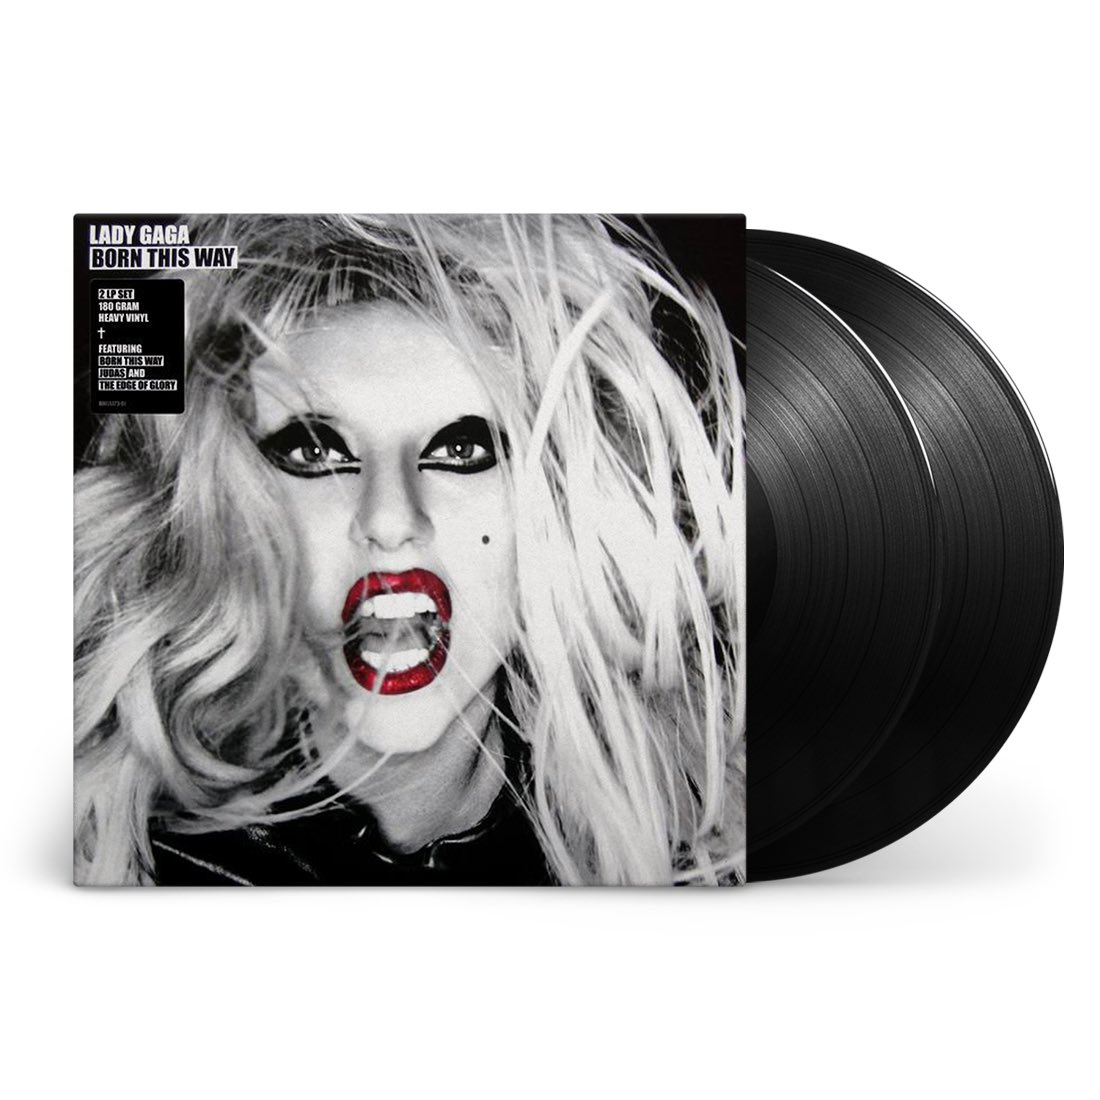 My personal fav Born This Way vinyl:standard black